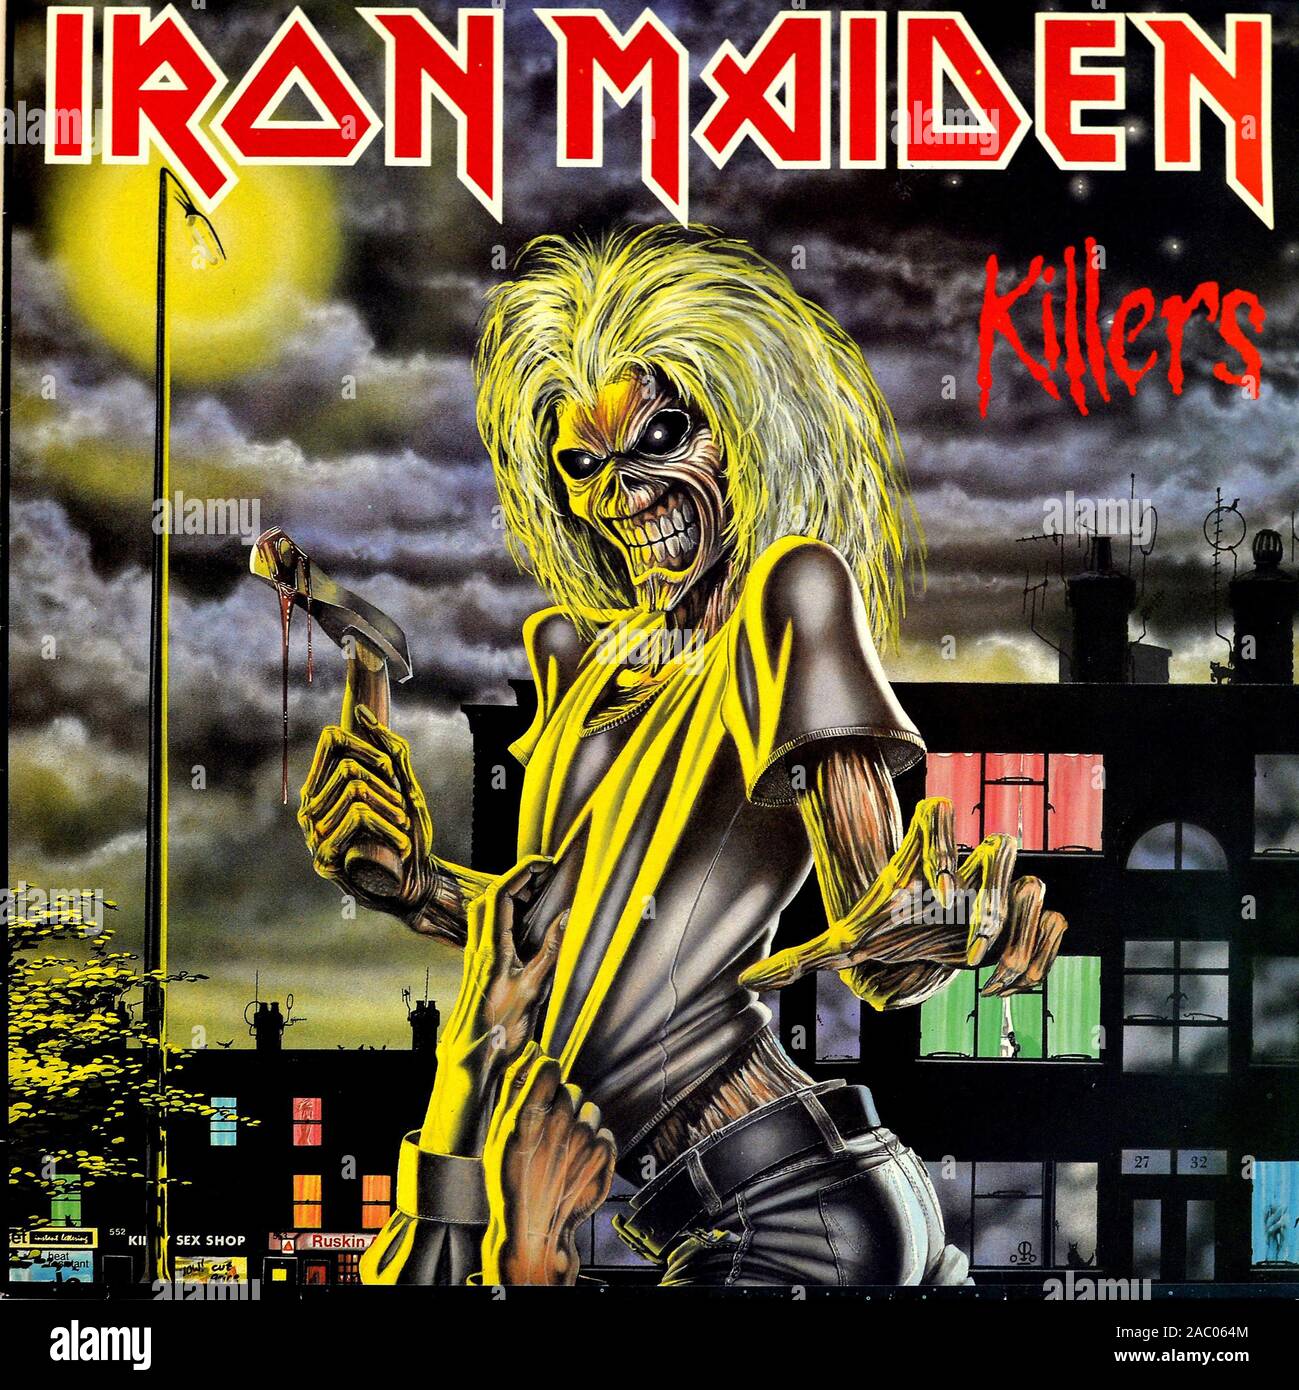 Iron Maiden Killers - Vintage vinile copertina album Foto Stock